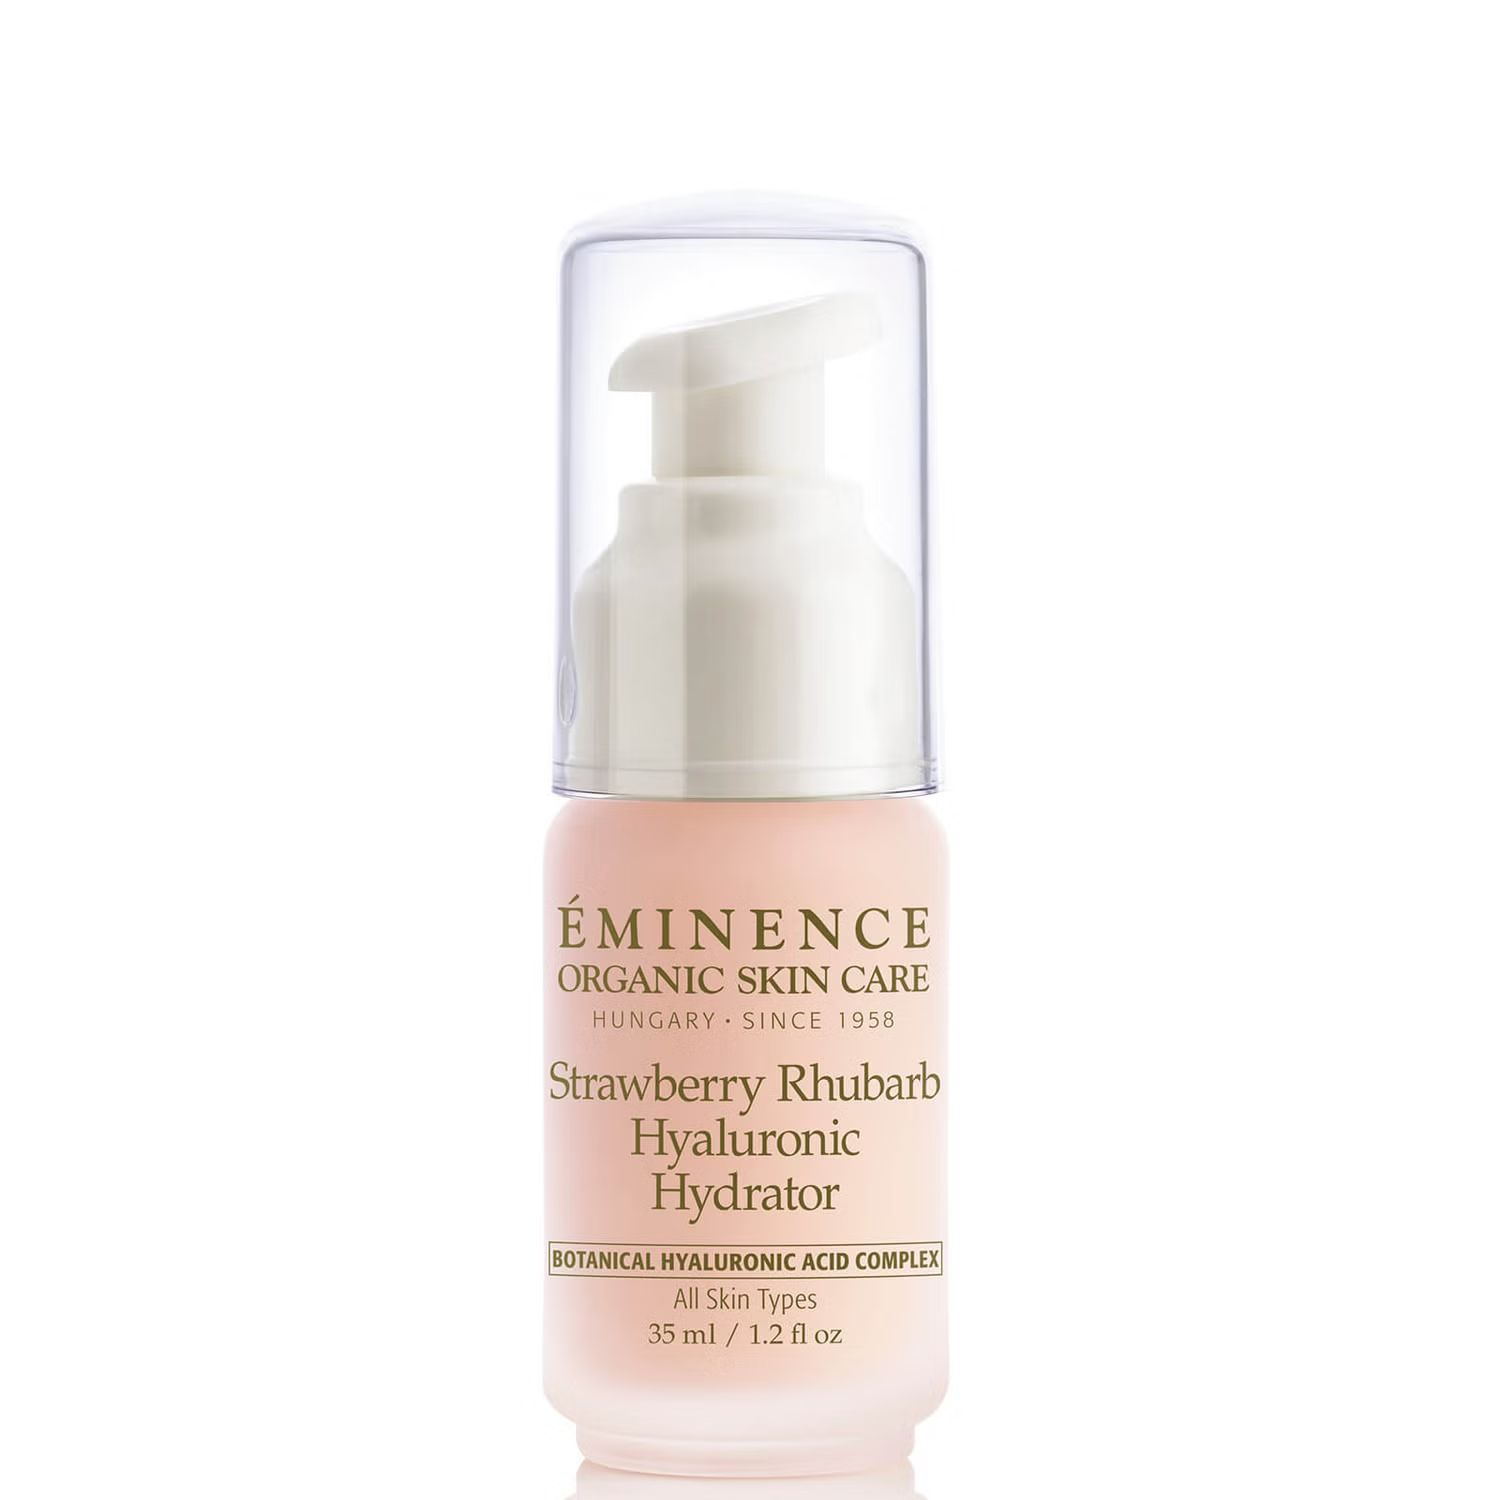 Eminence Organic Skin Care Strawberry Rhubarb Hyaluronic Hydrator 35ml | Dermstore (US)